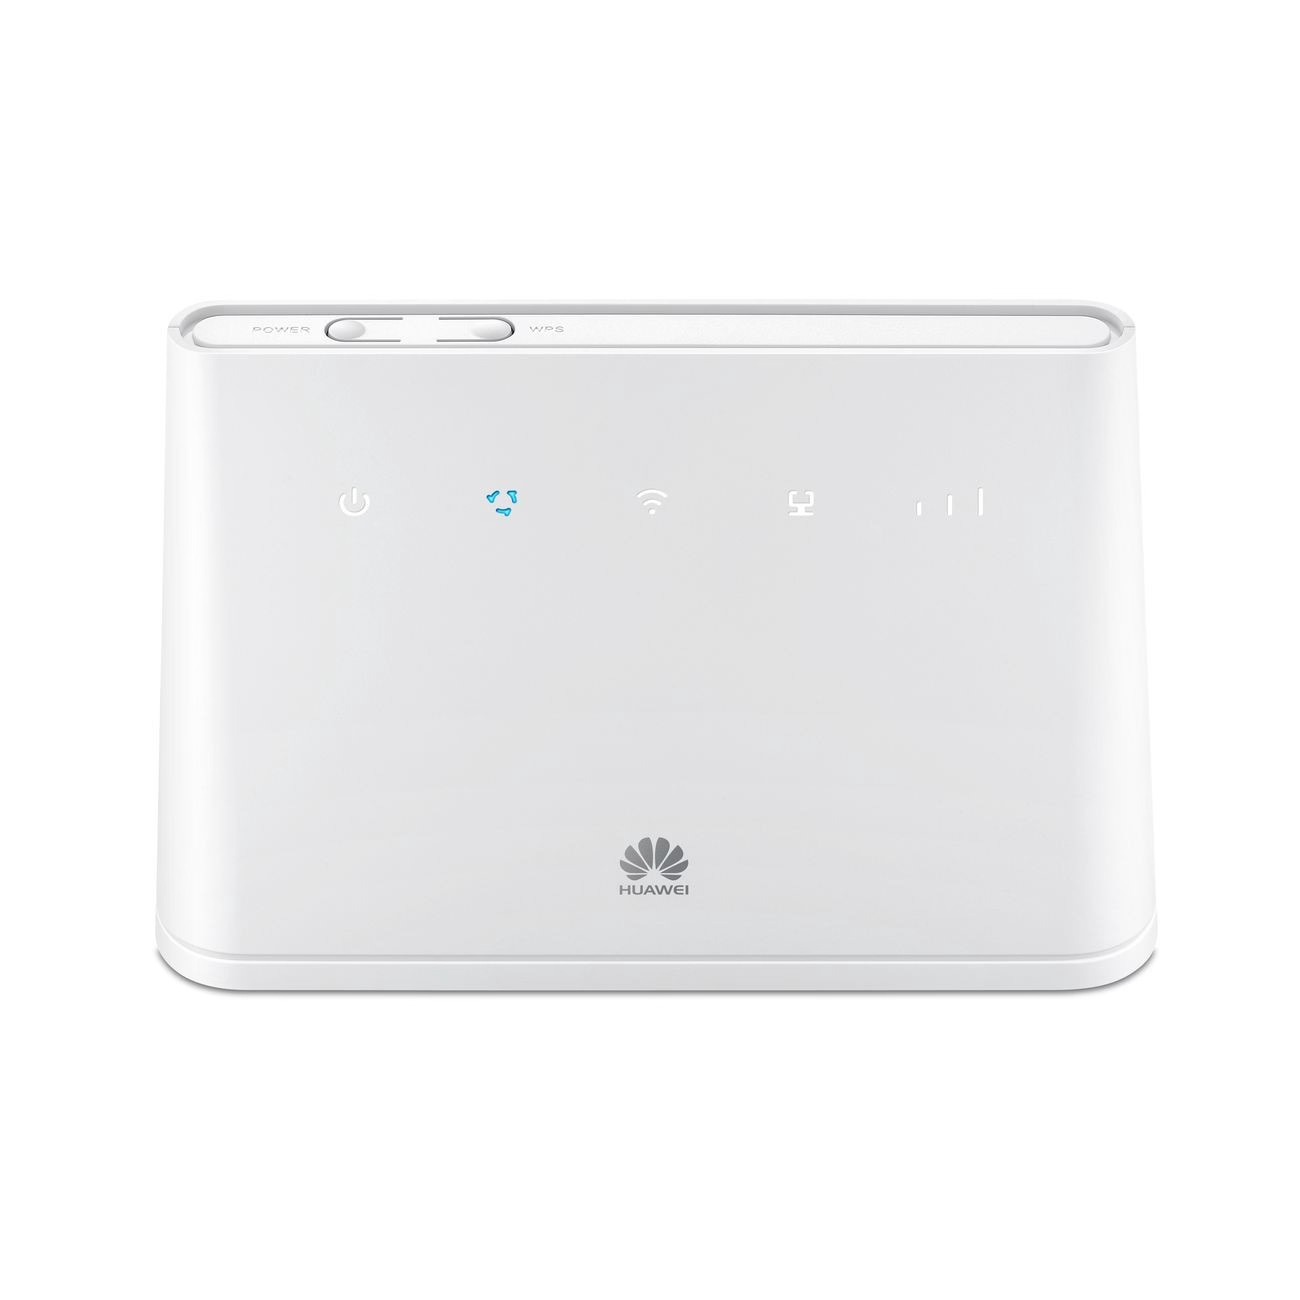 Роутер Huawei B311-221-A, белый 51060HWK - фото 1